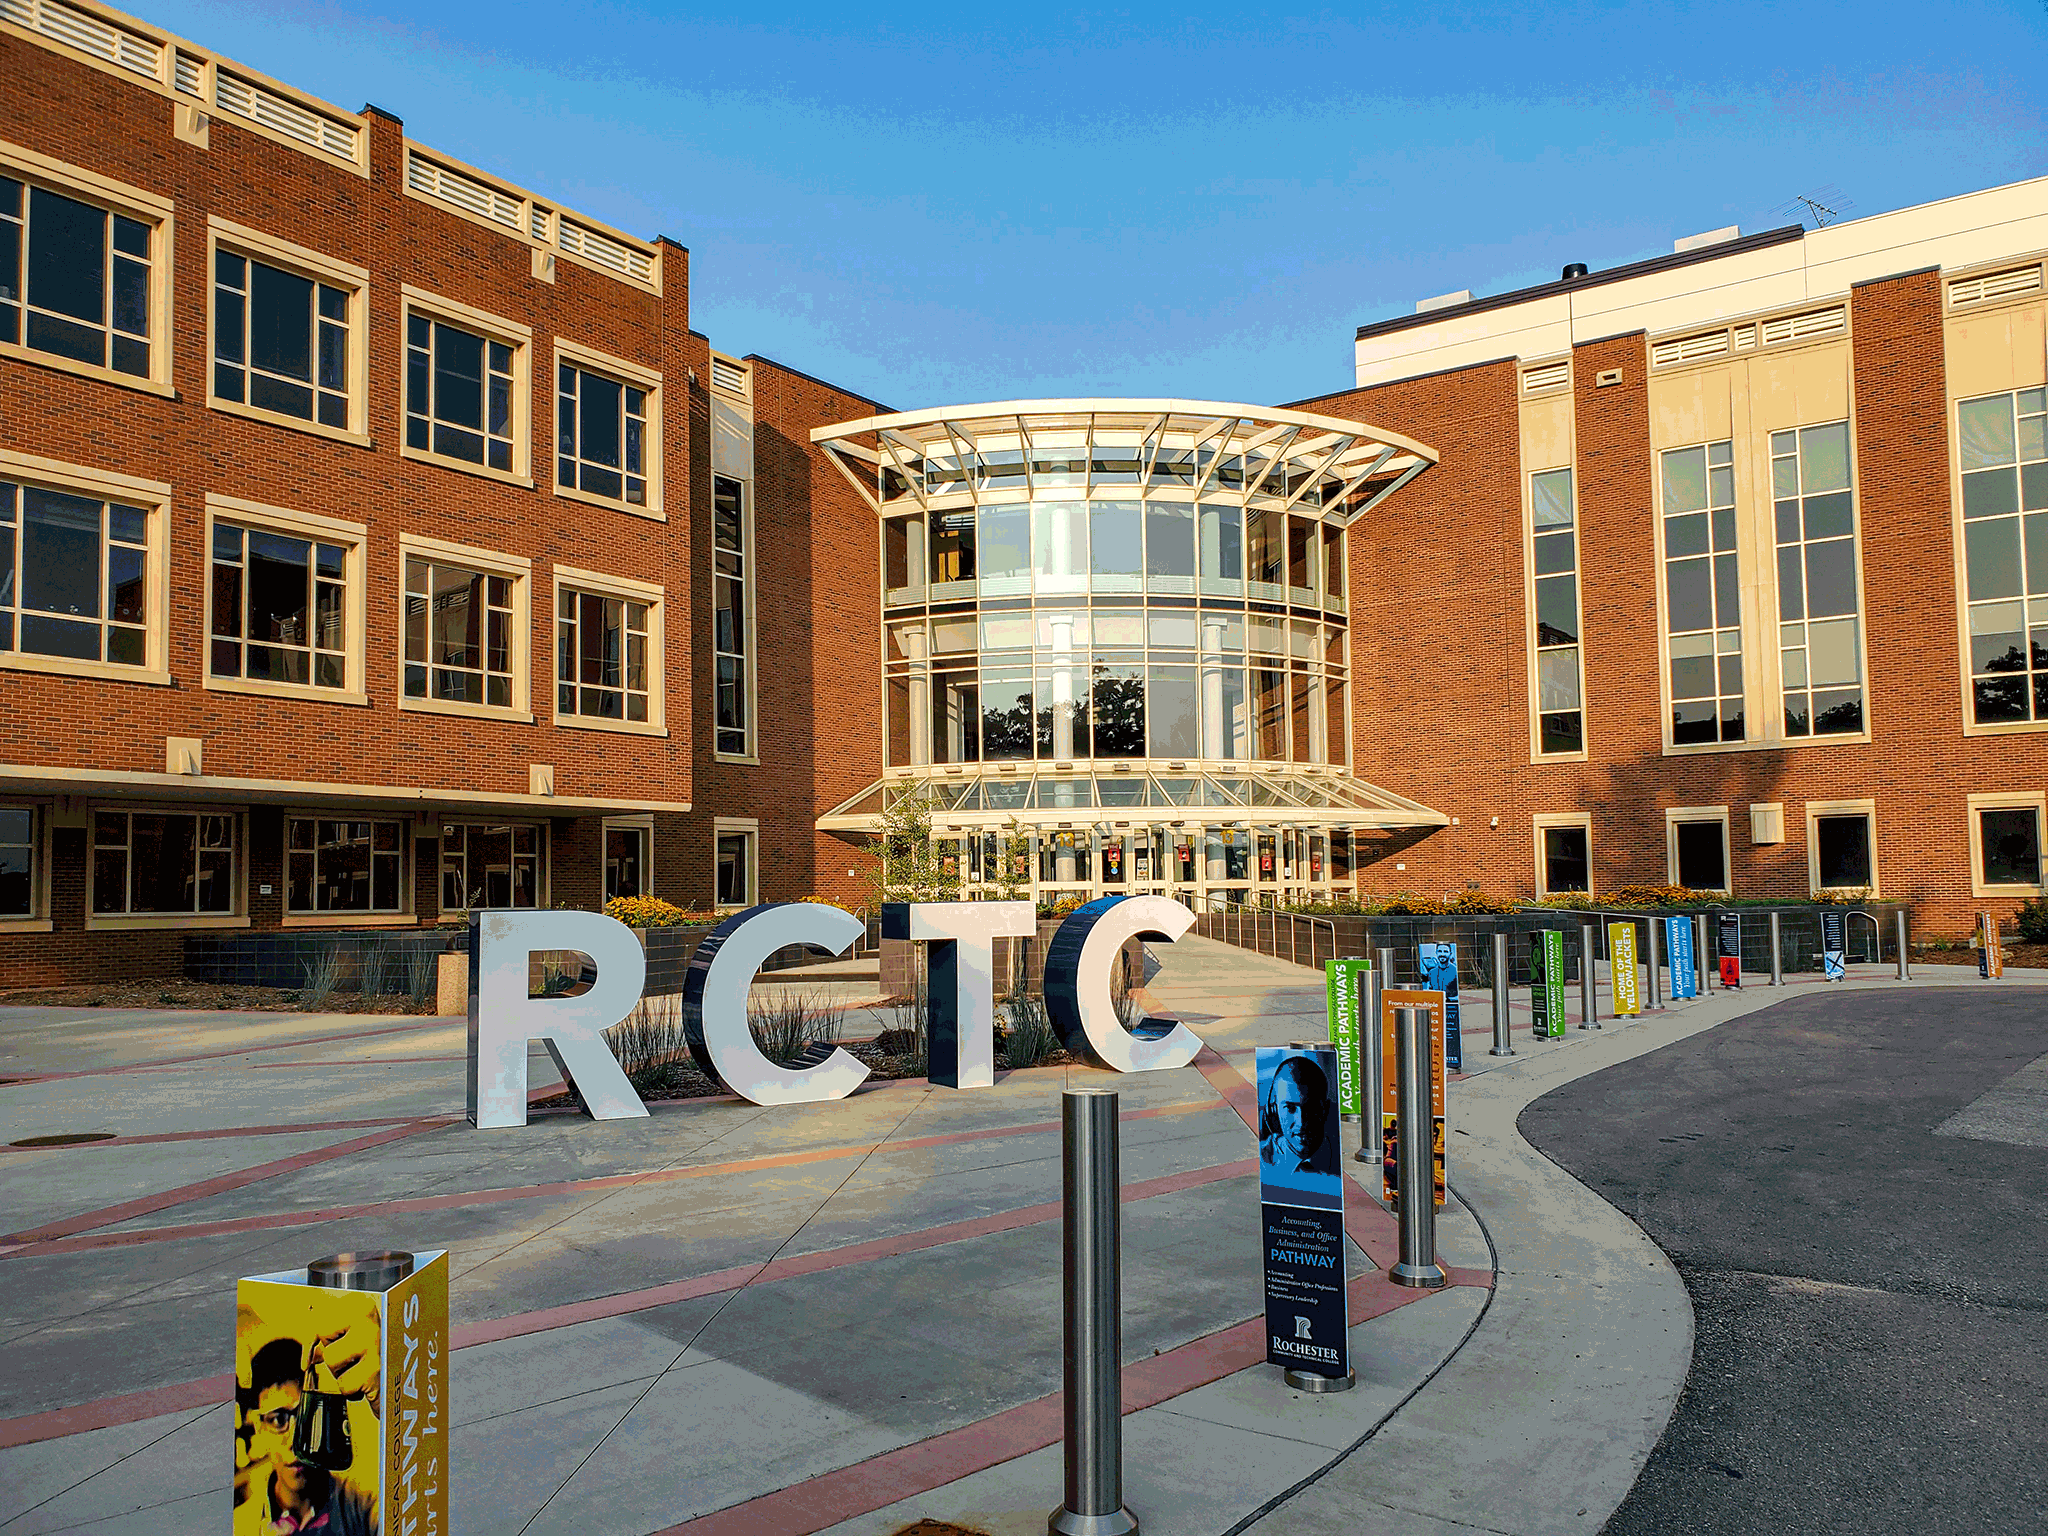 Atrium patio with Large RCTC Letters